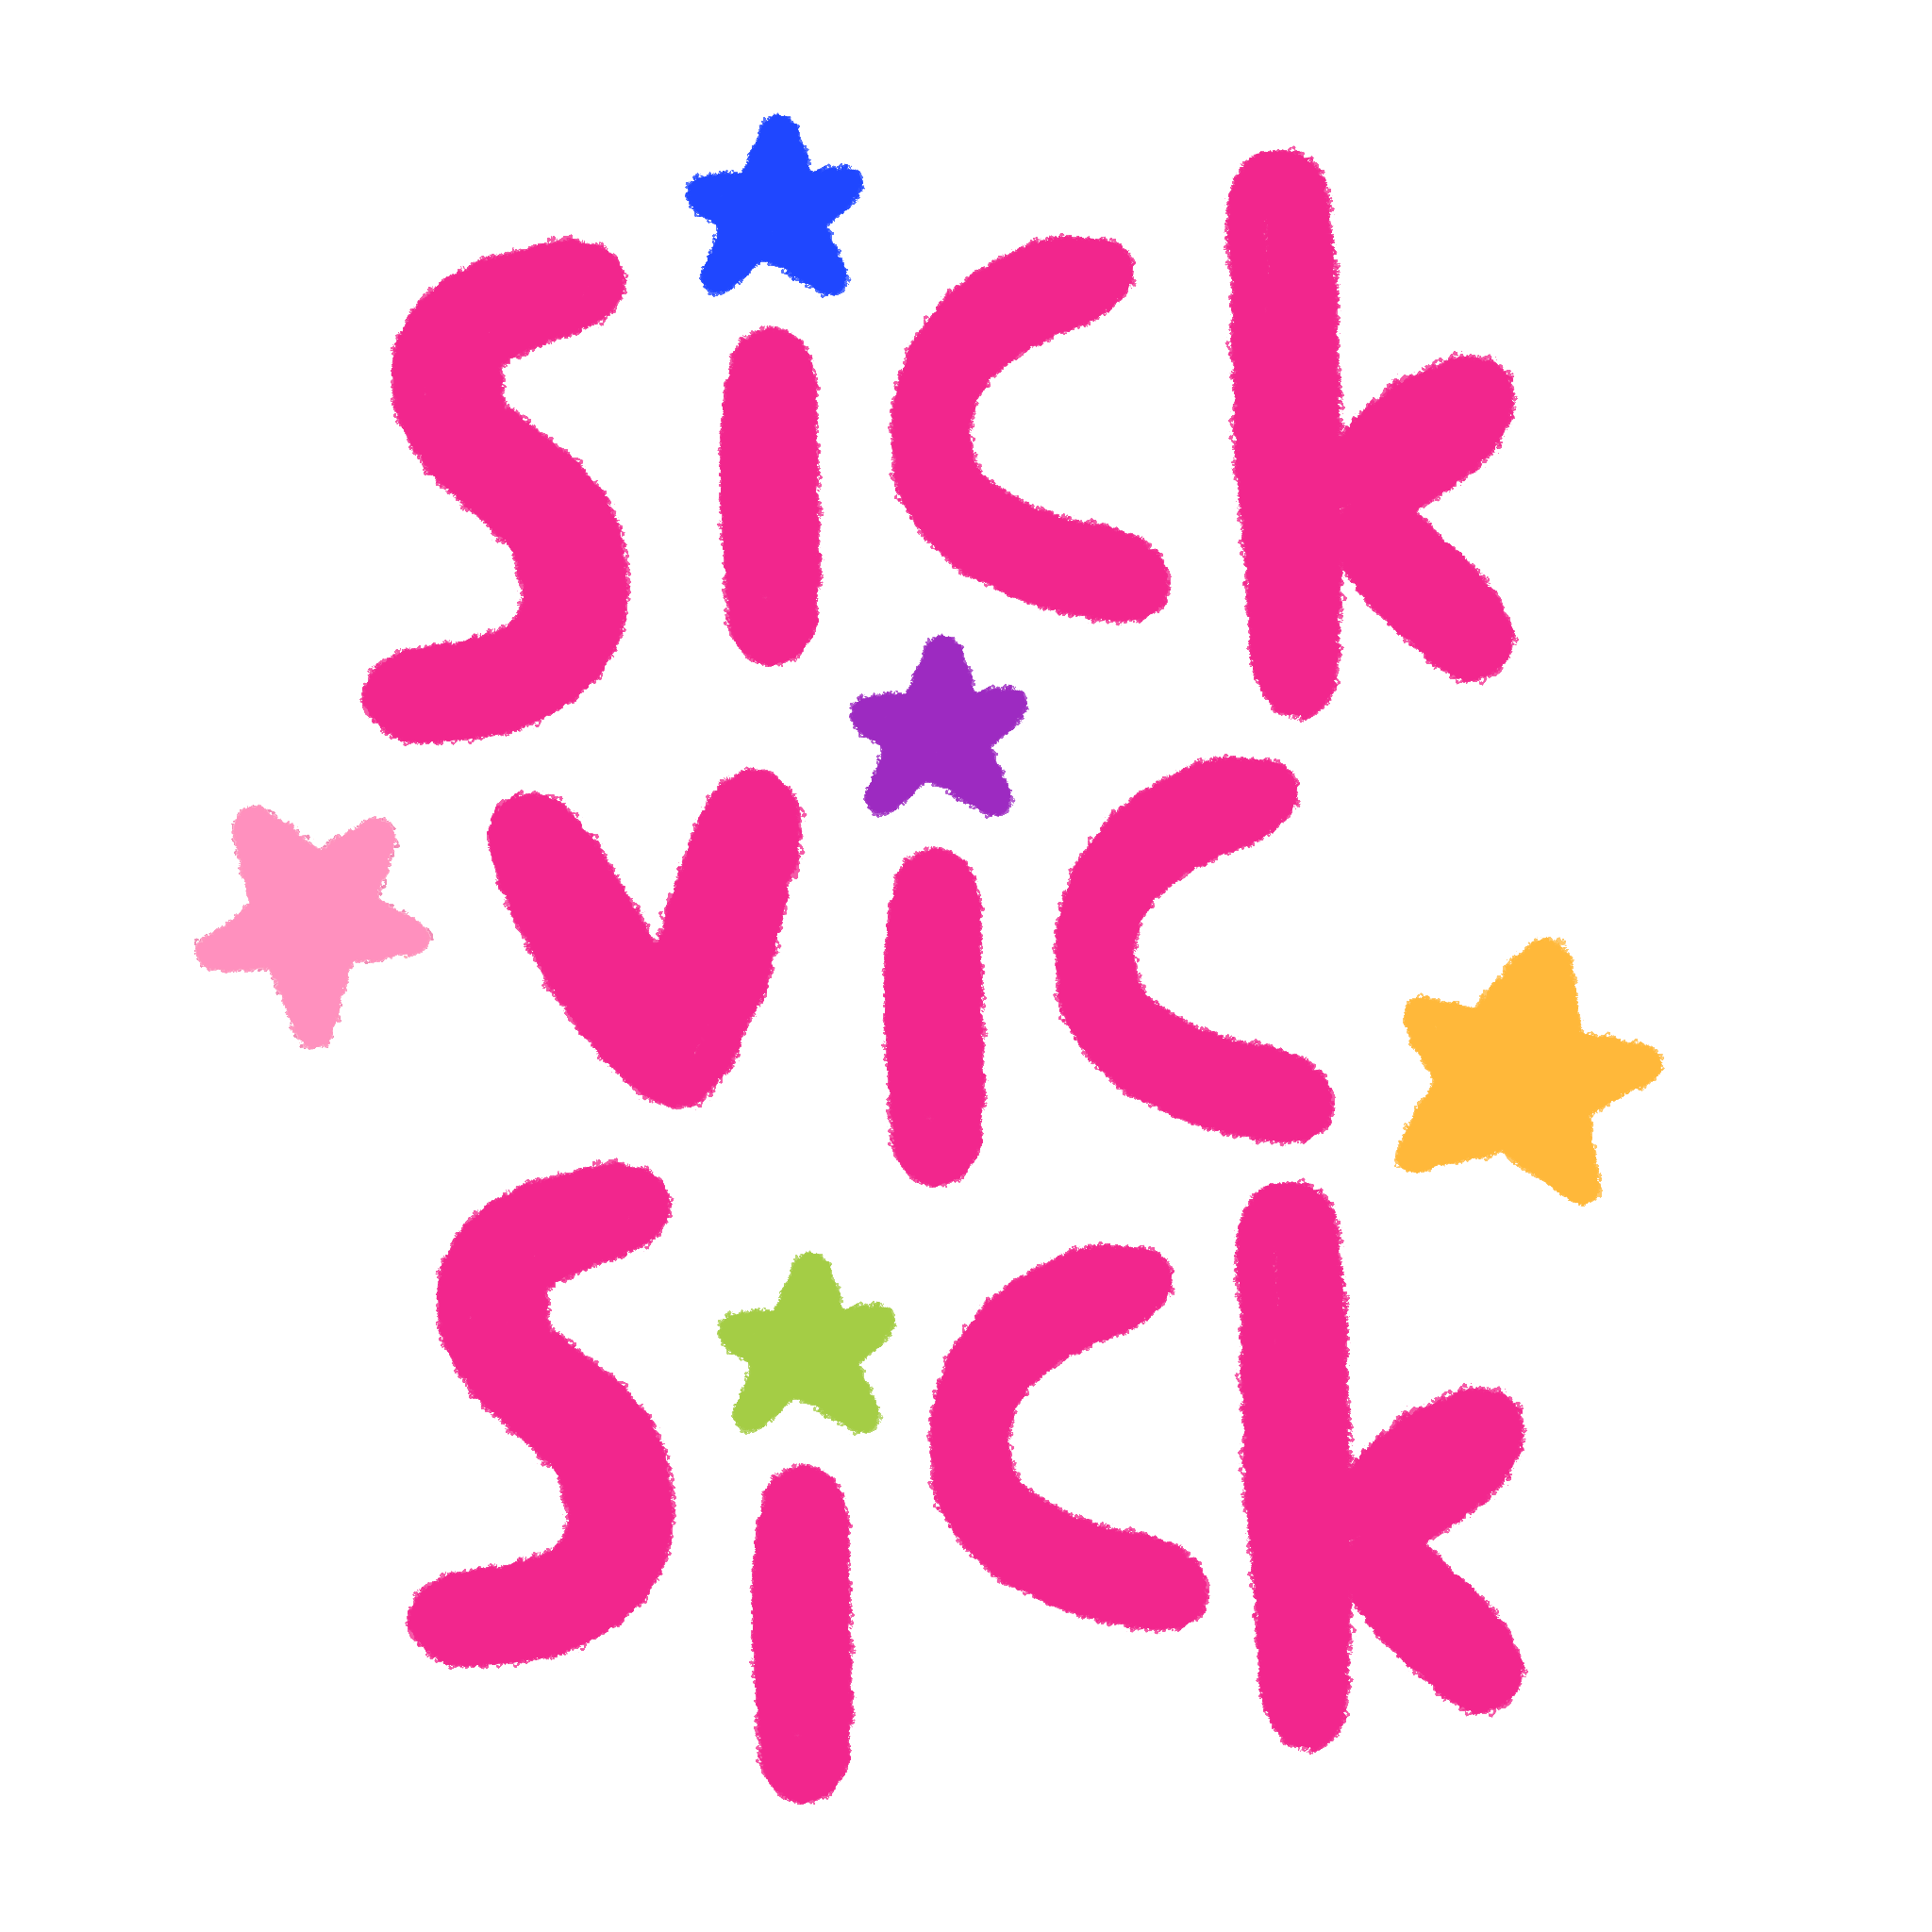 sickvicsick logo